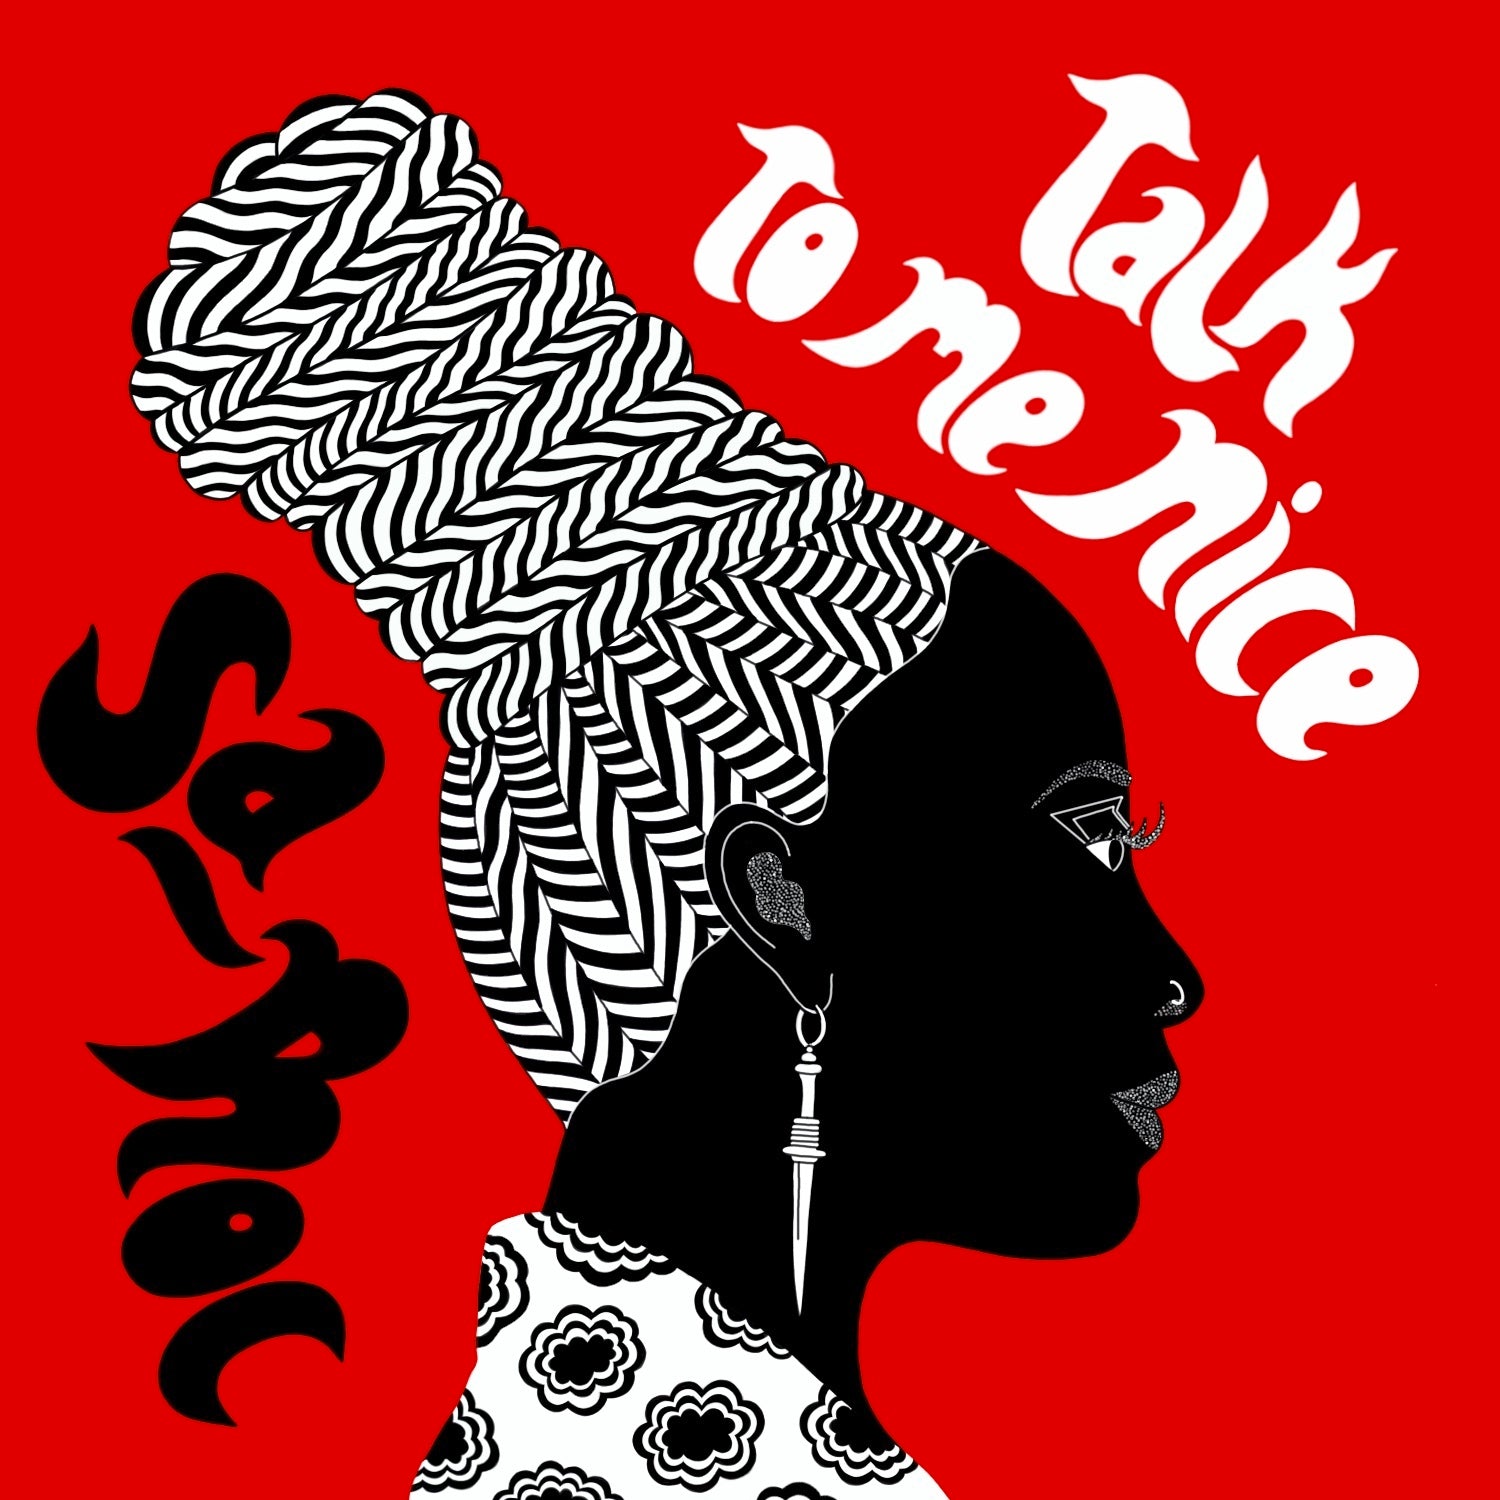 Sa-Roc "Talk To Me Nice" New Track + Video